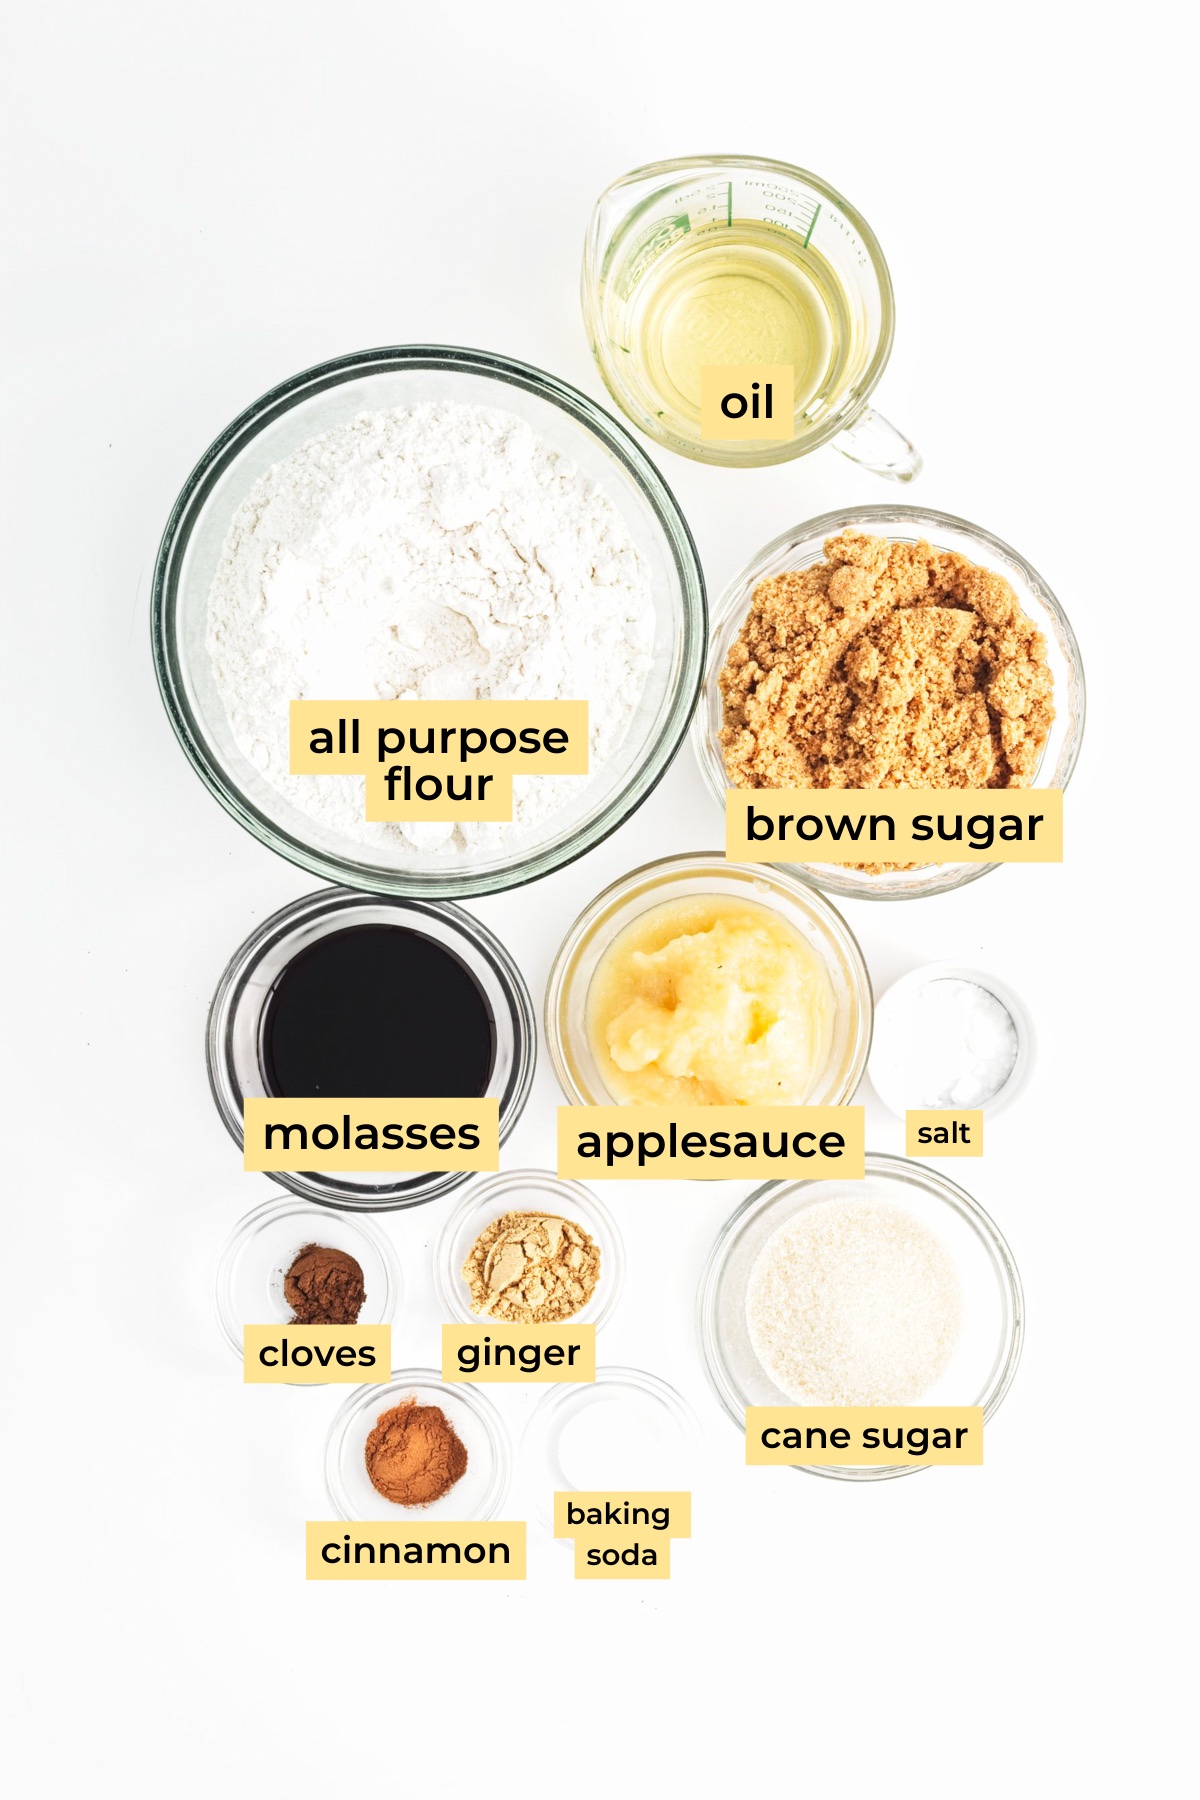 Ingredients: all purpose flour, oil, brown sugar, molasses, applesauce, salt, cloves, ginger, cinnamon, baking soda and cane sugar.